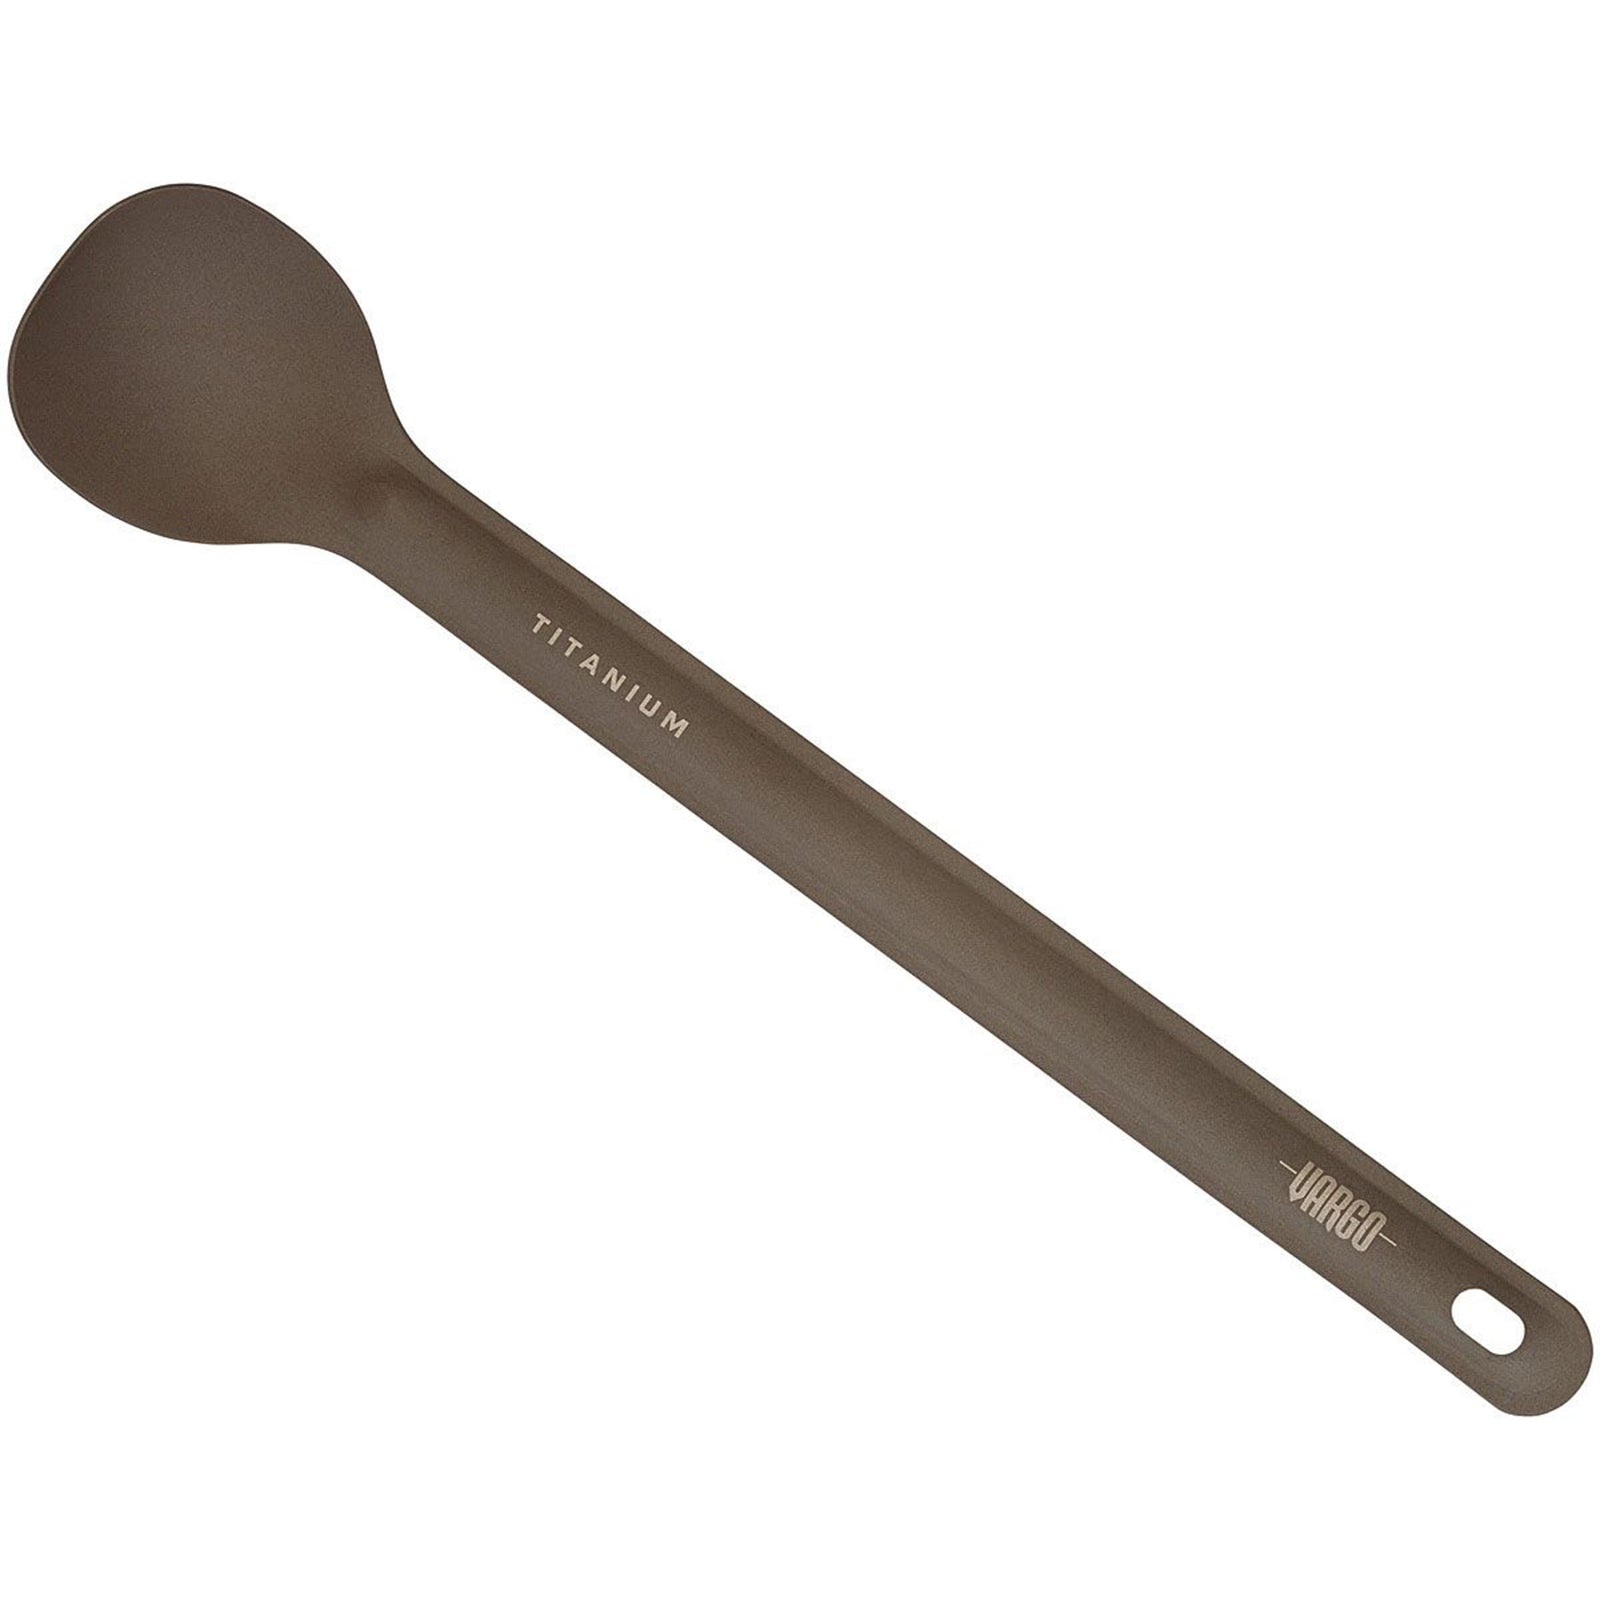 vargo titanium long-handled spoon, 8.5" length